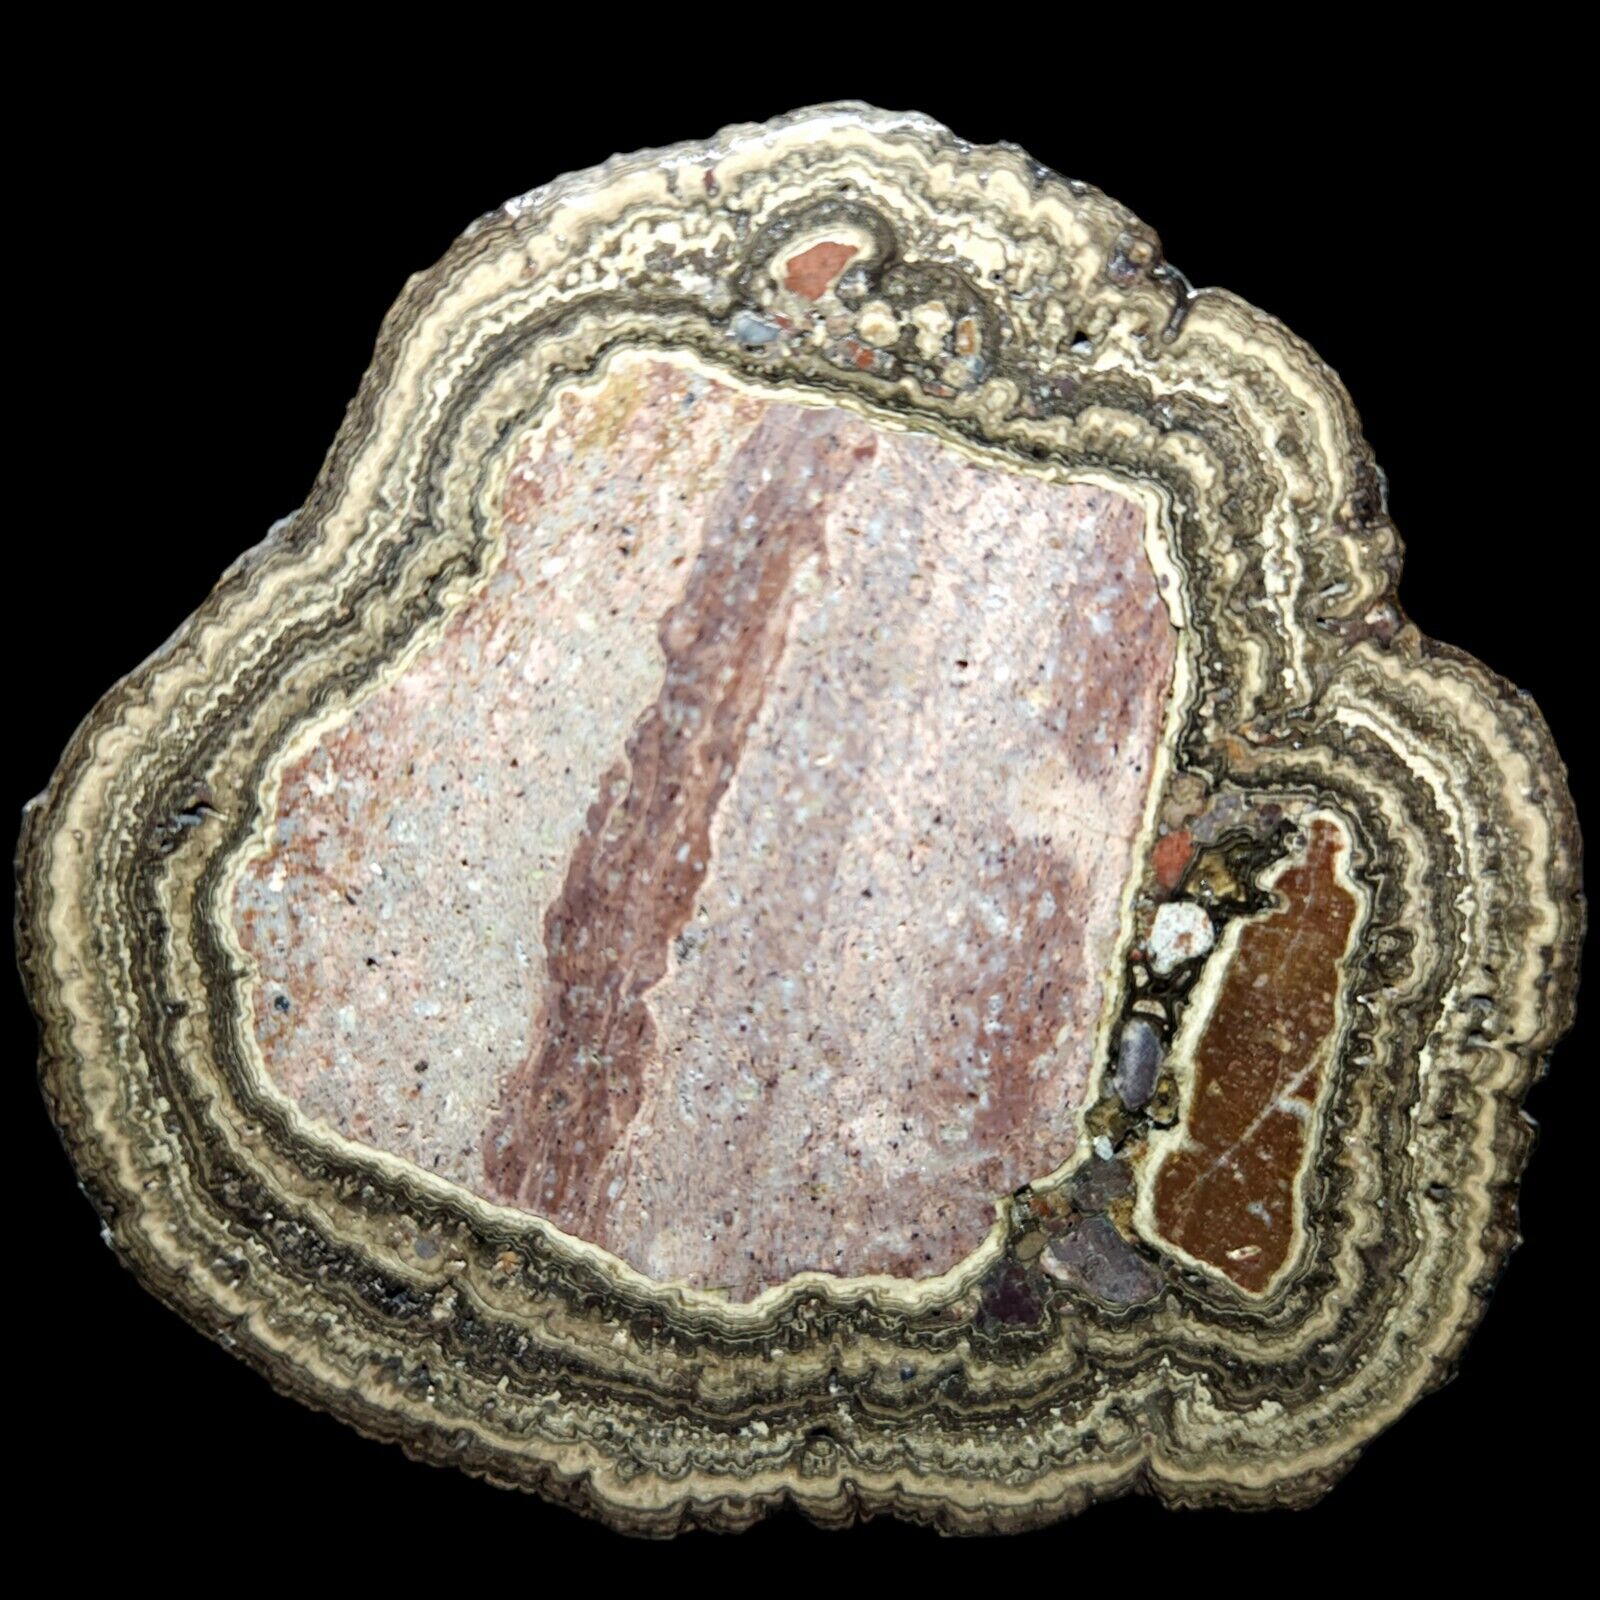 Polished Oncolite Stromatolite Microbialite Fossil, Cretaceous Age, Mexico, 165G